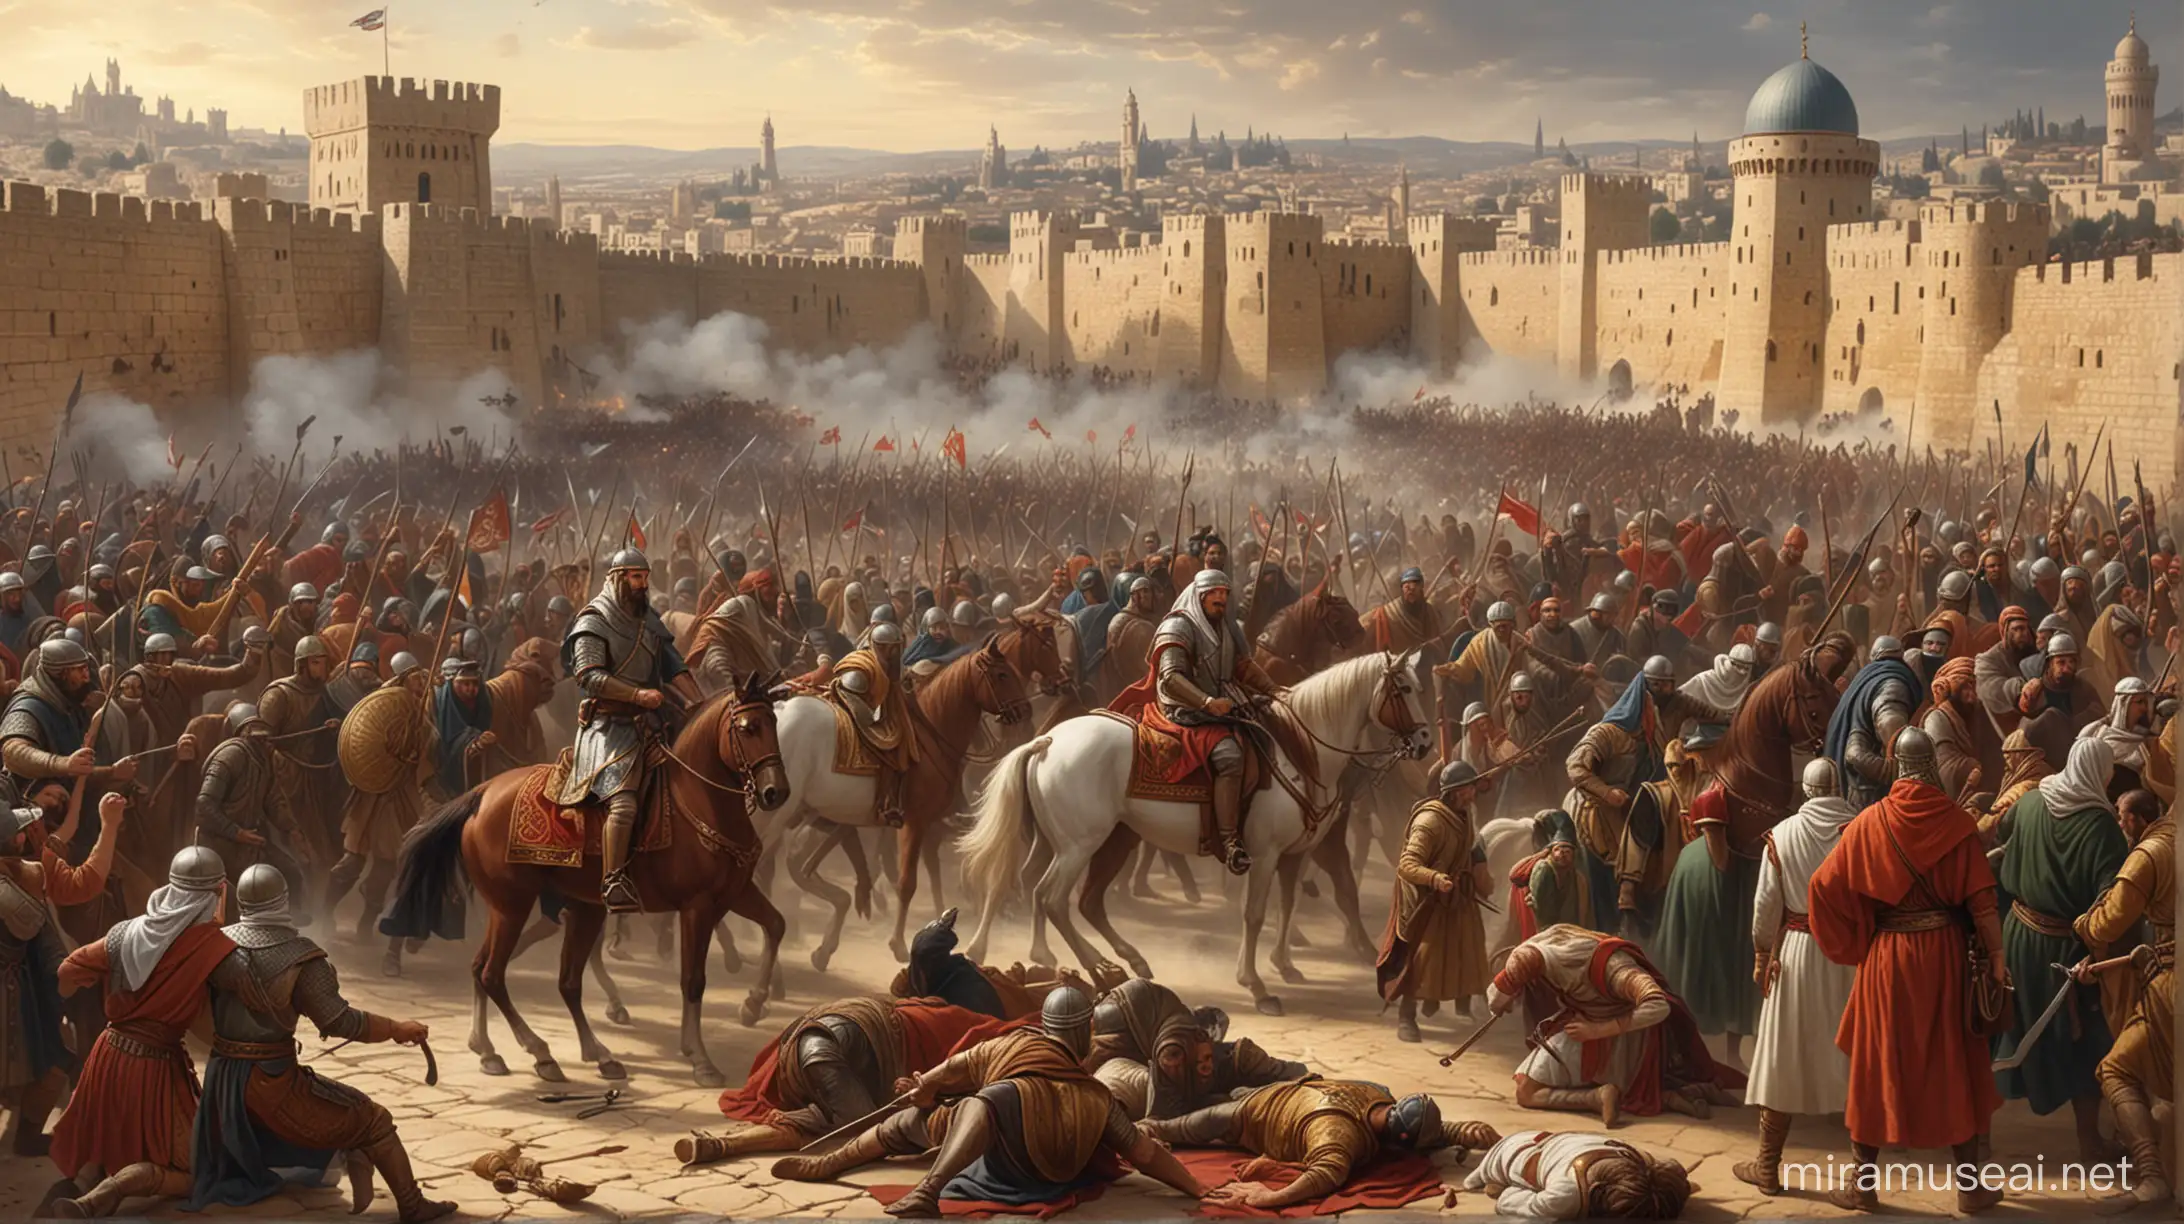 King Richard Defeated by Muslims in Jerusalem Battle